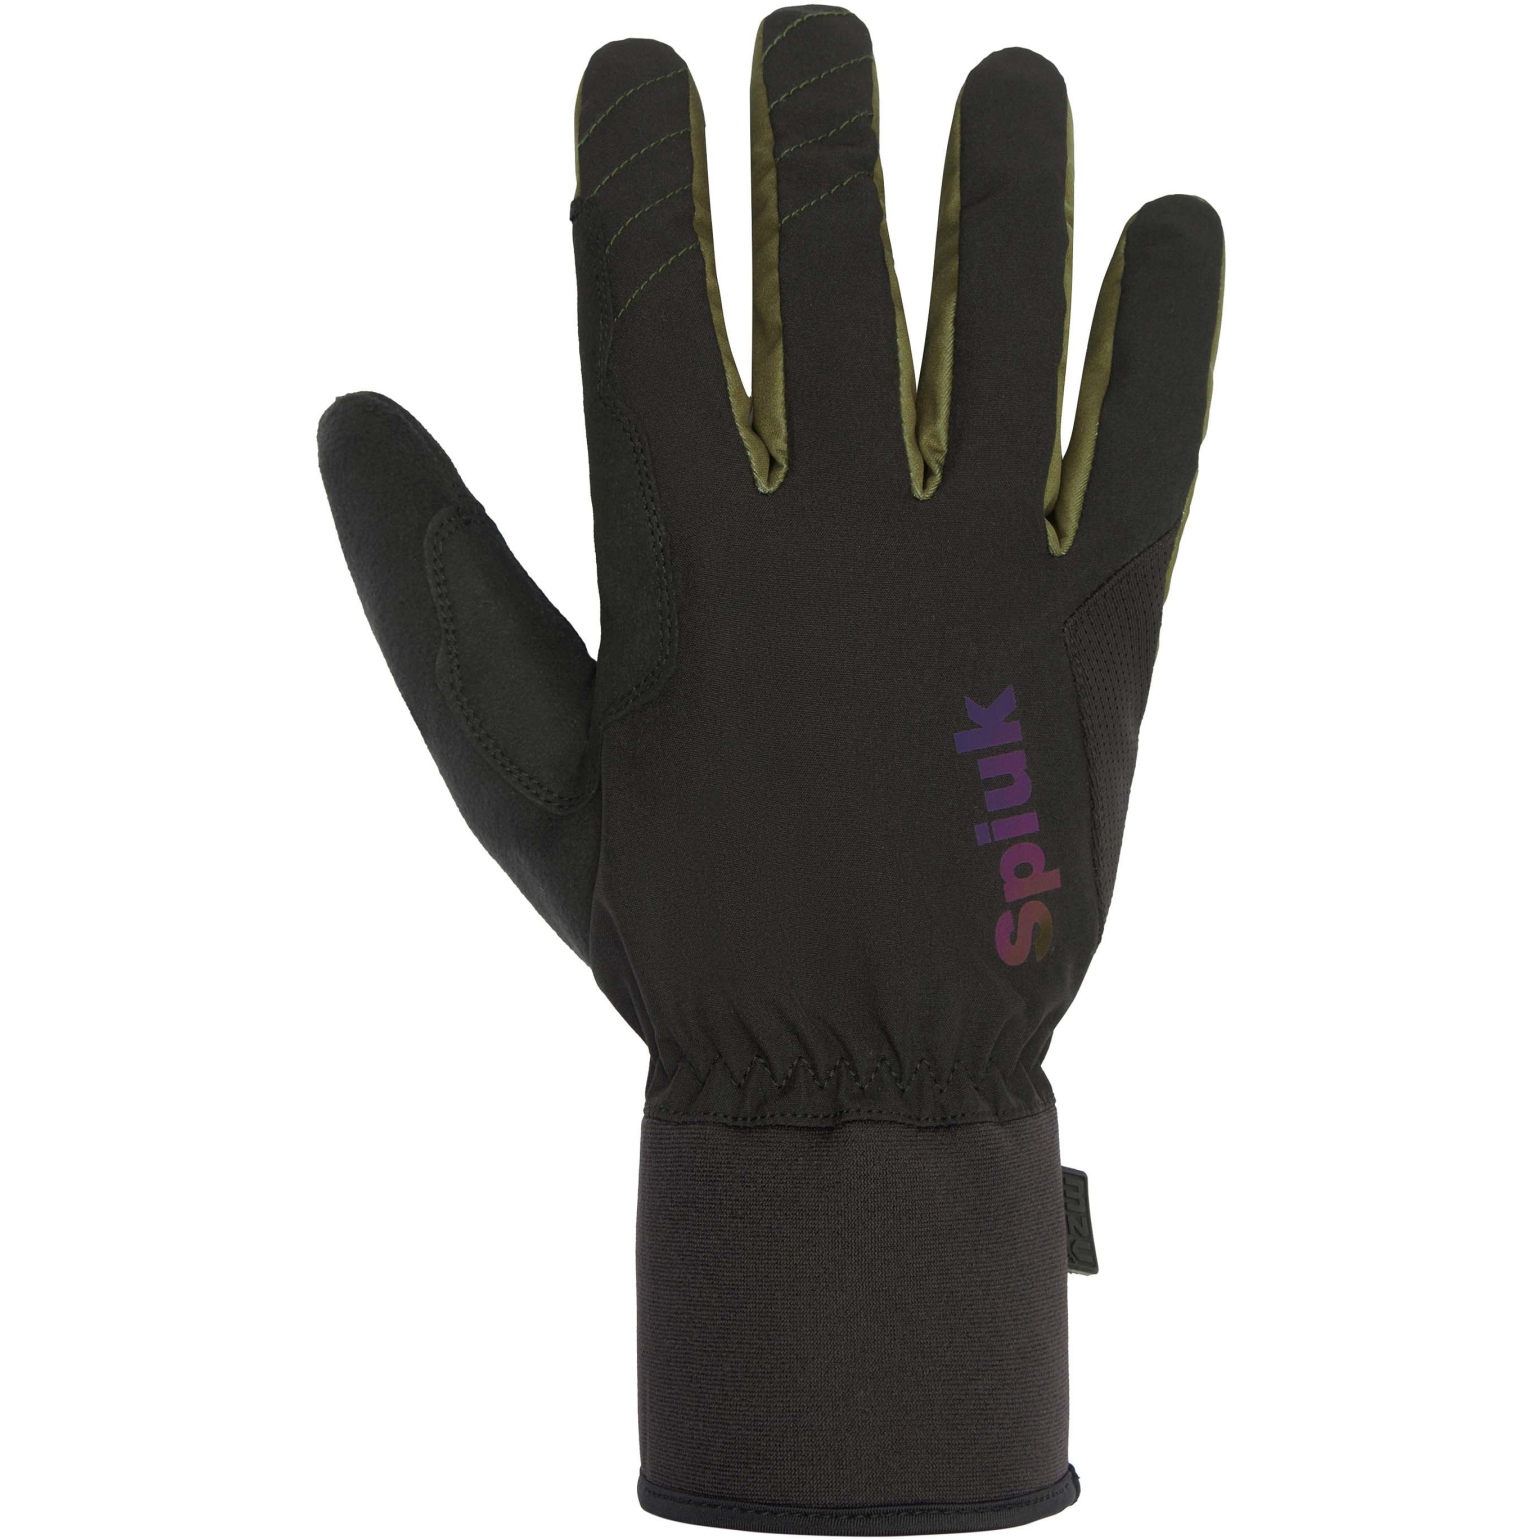 Image of Spiuk ANATOMIC Membrane Gloves - black/khaki